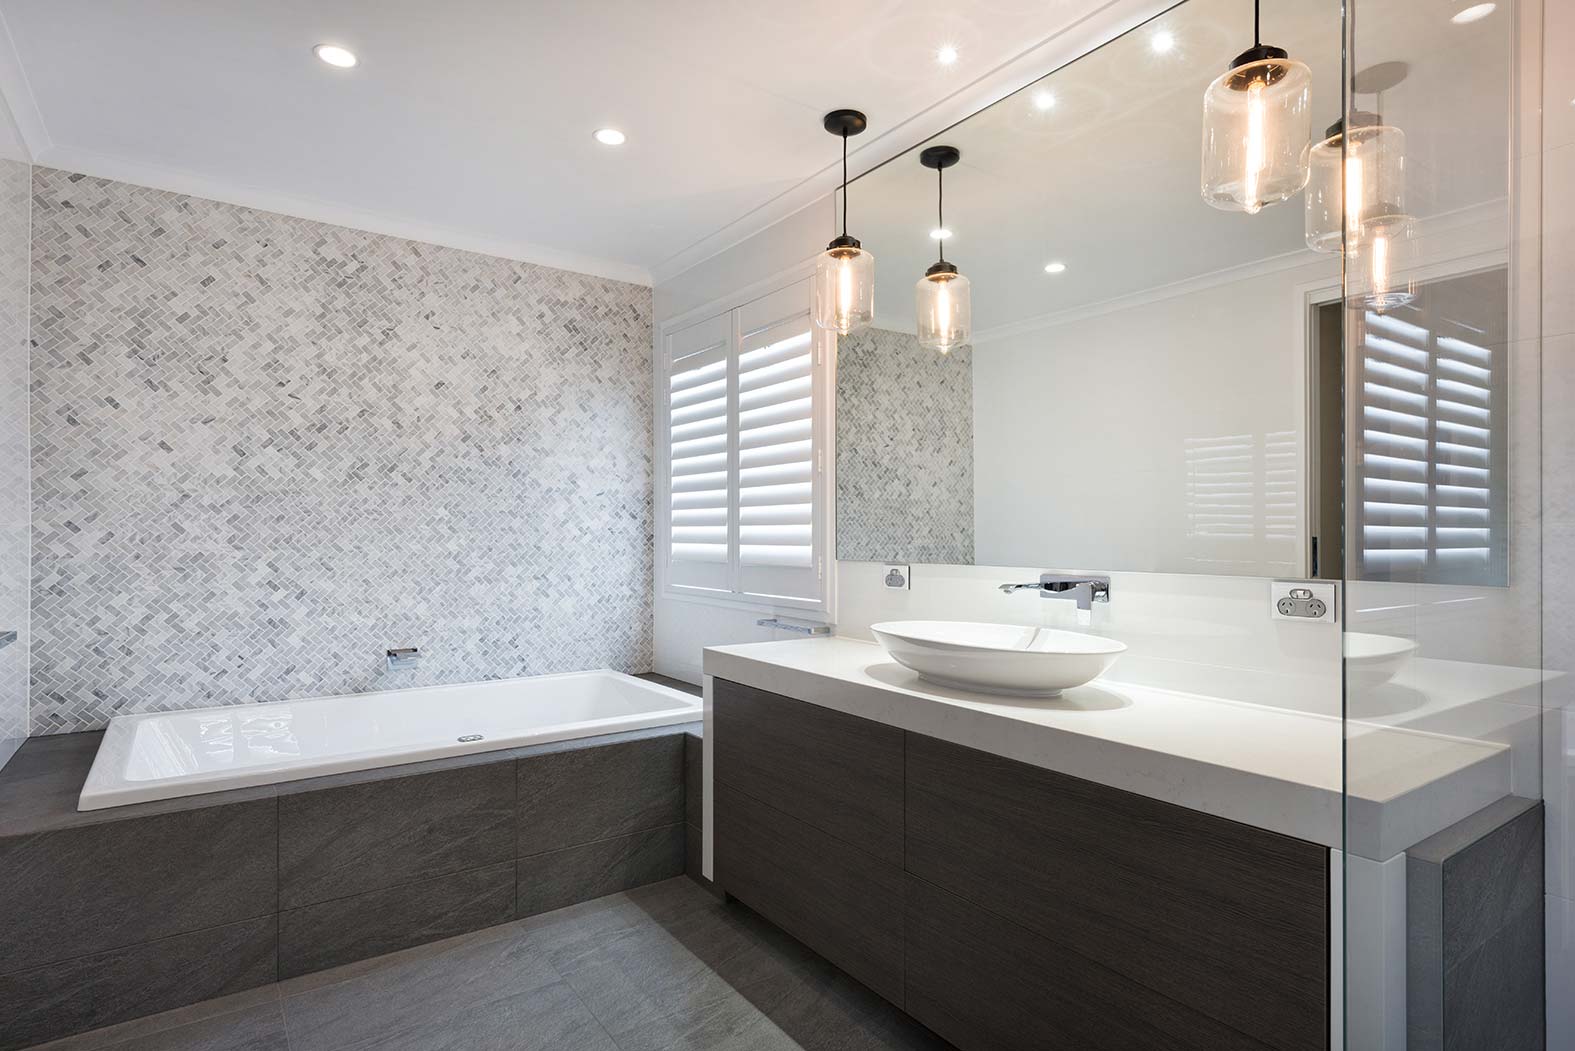 Bathroom Design Adelaide | Bathroom Design Ideas | Adelaide Bathrooms ...